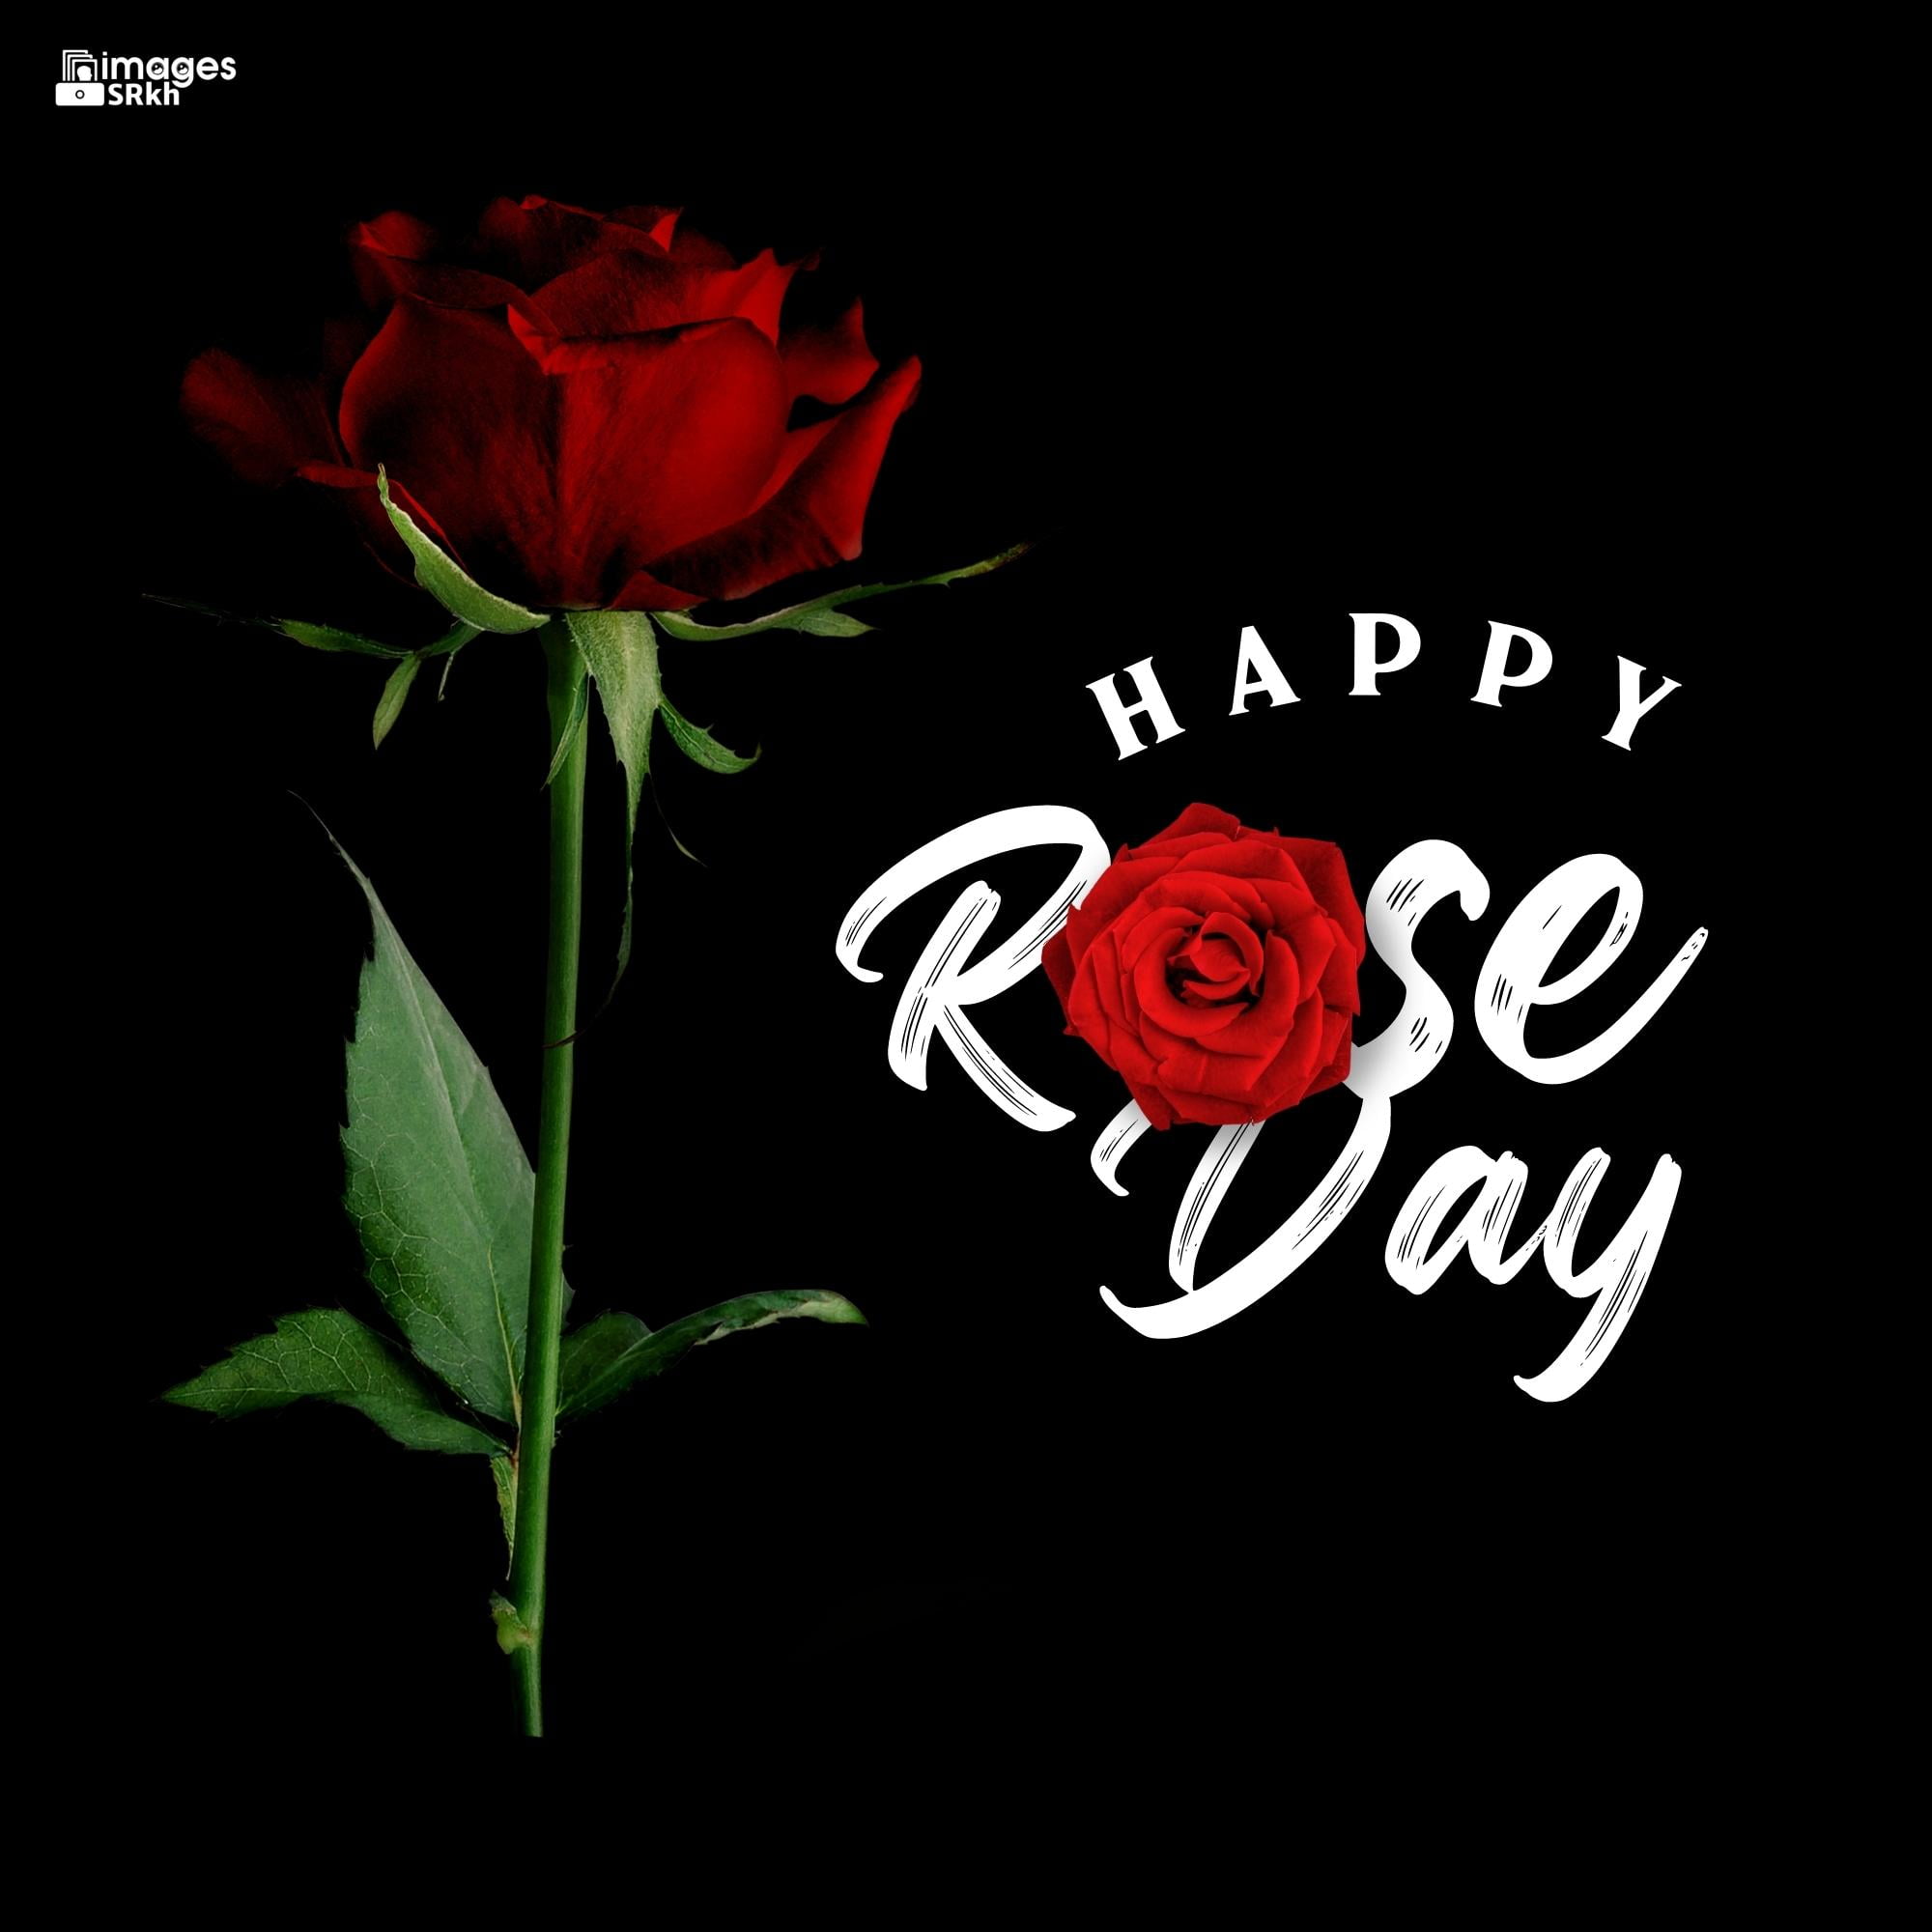 🔥 Happy Rose Day Image Hd Download (11) Download free - Images SRkh